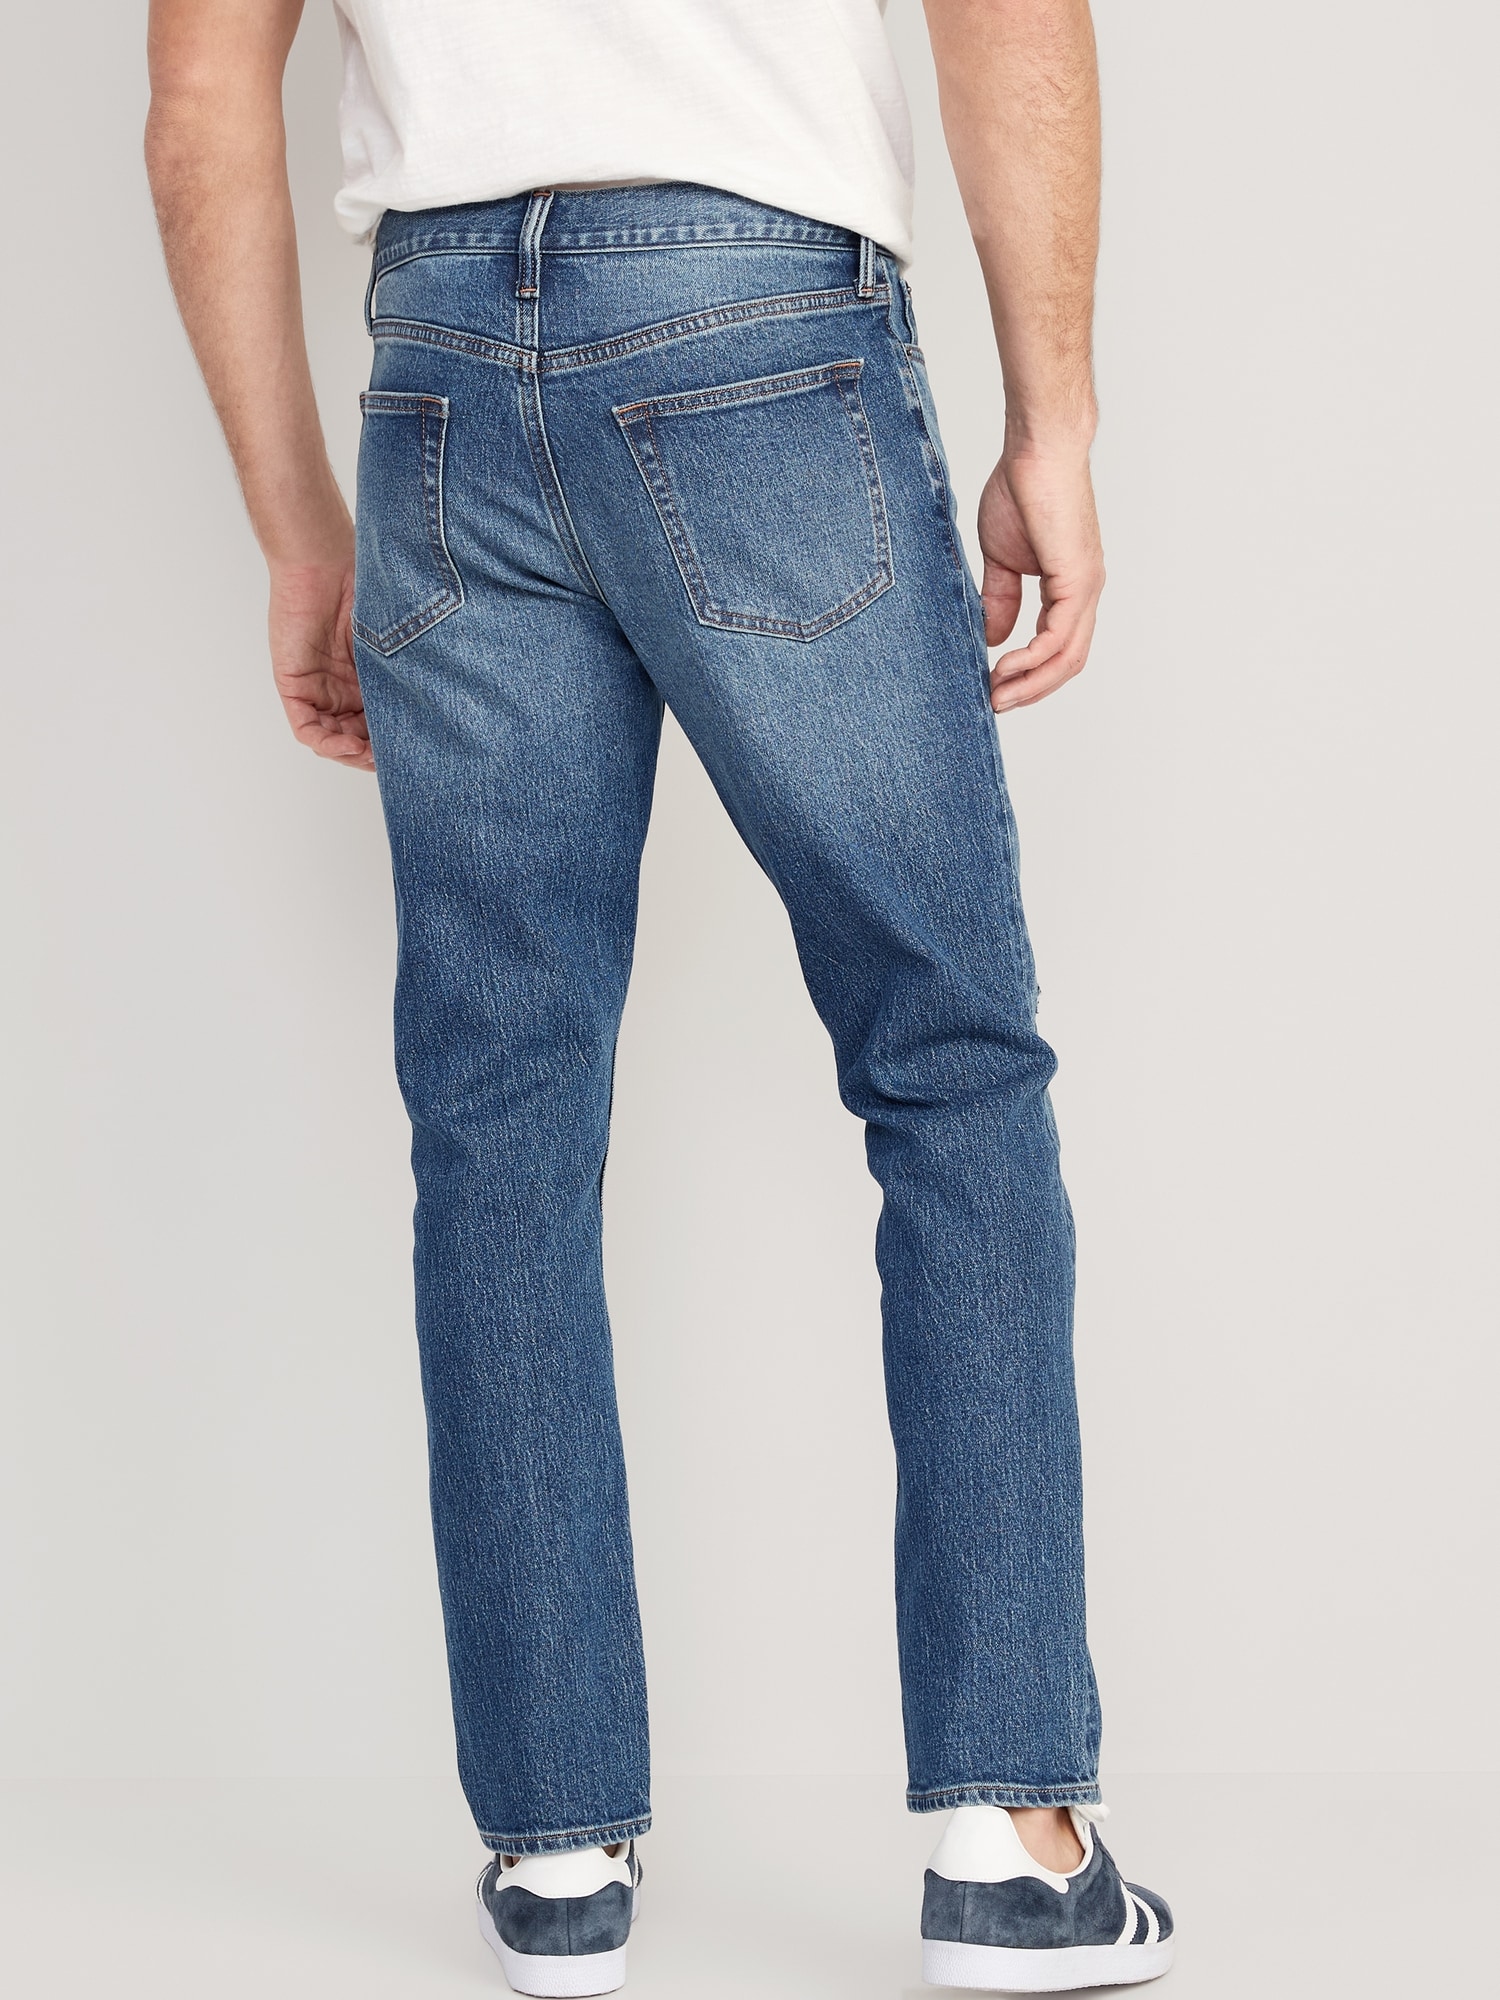 GAP Men's Original Straight Fit Denim Jeans, Medium Wash, 28W x 30L :  : Clothing, Shoes & Accessories